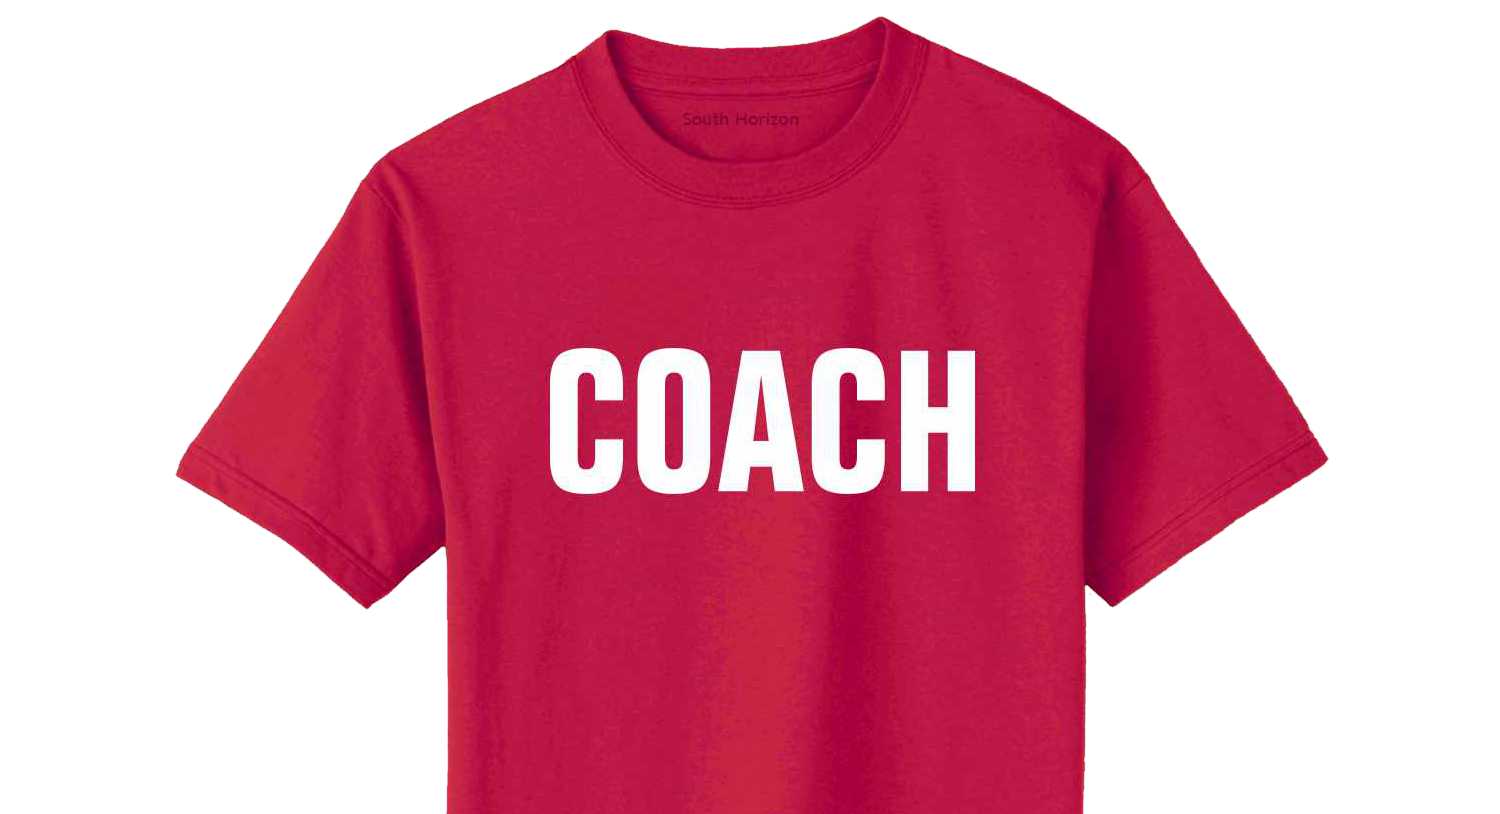 COACH & Trainer Shirts